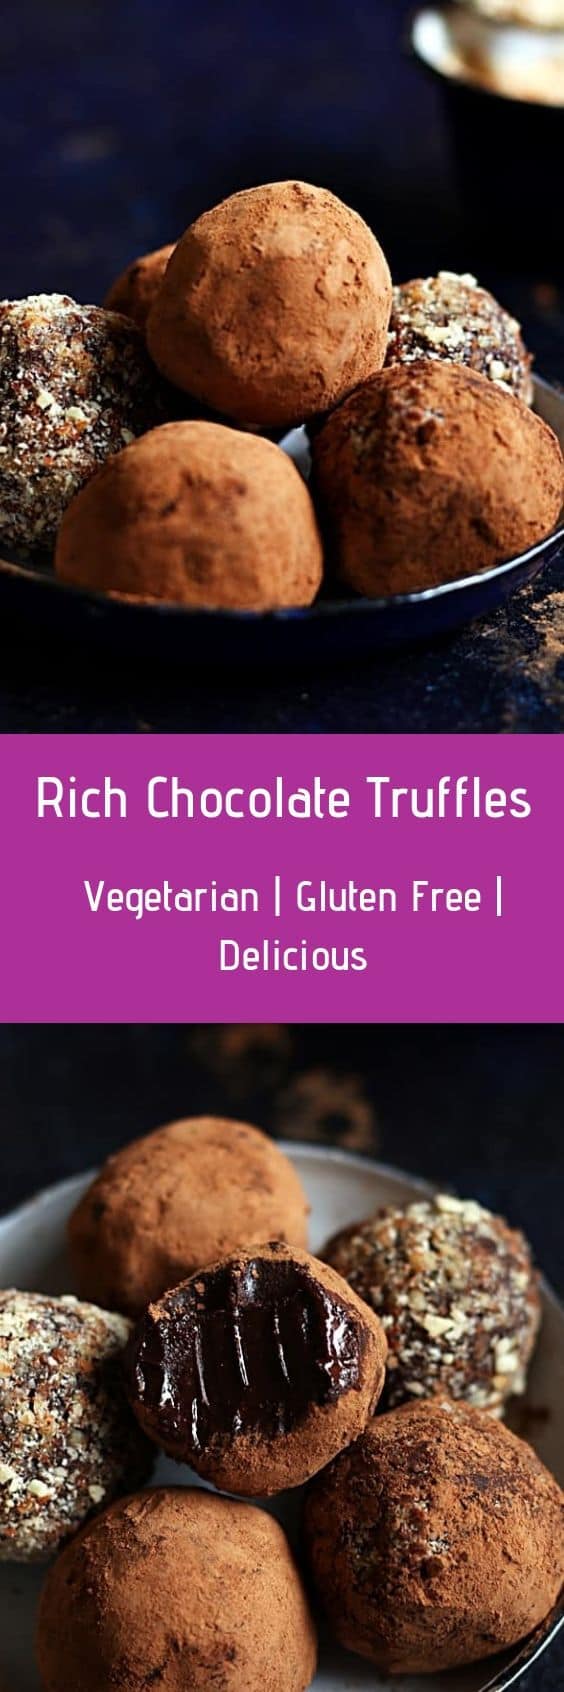 chocolate truffles recipe | How to make chocolate truffles